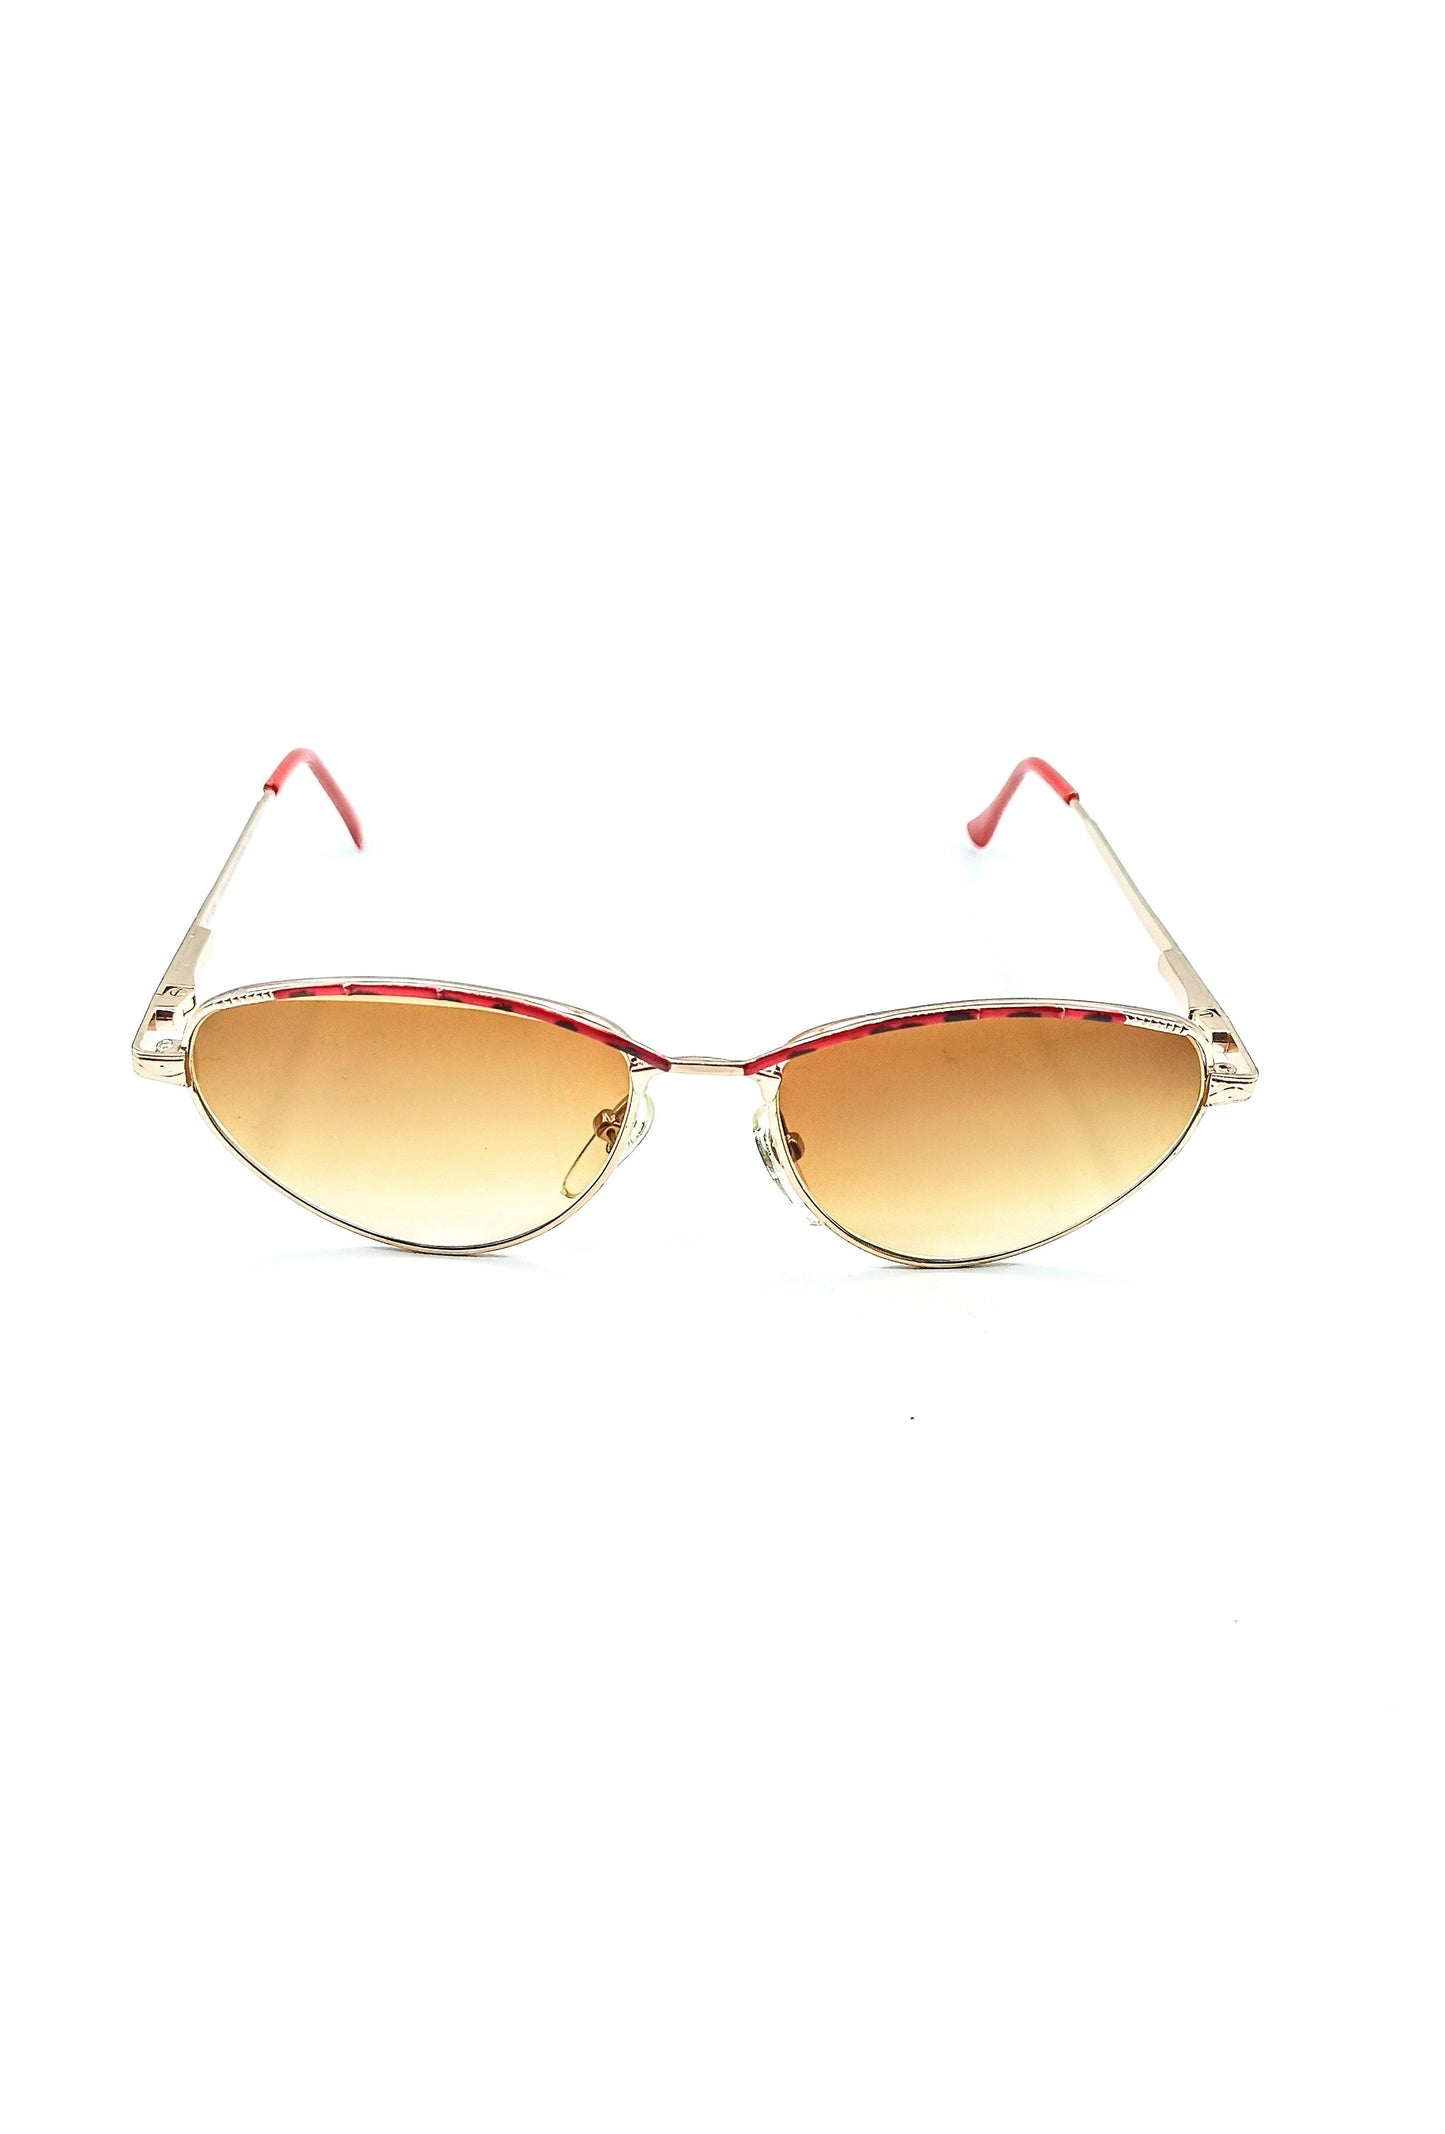 Vintage sunglasses for women Qoolst Greta made in Spain